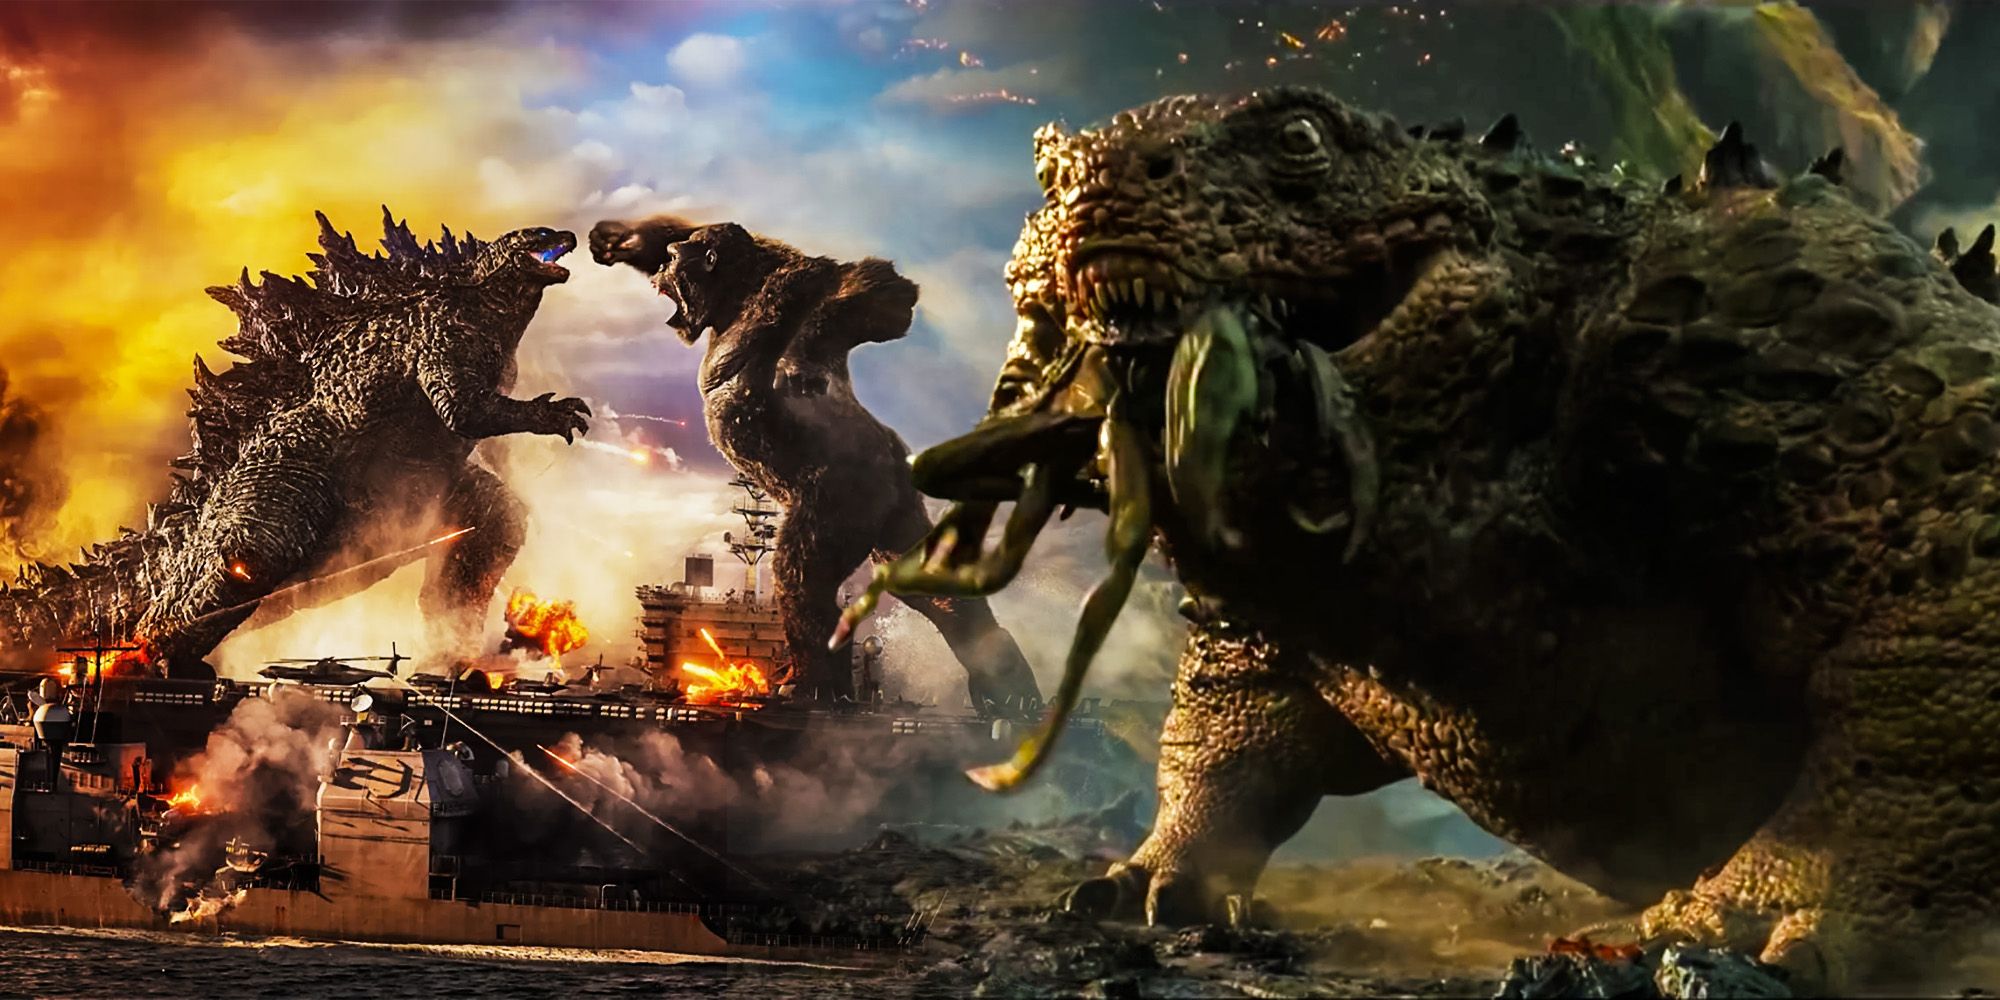 Godzilla vs kong 2 has 1 confirmed monster doug